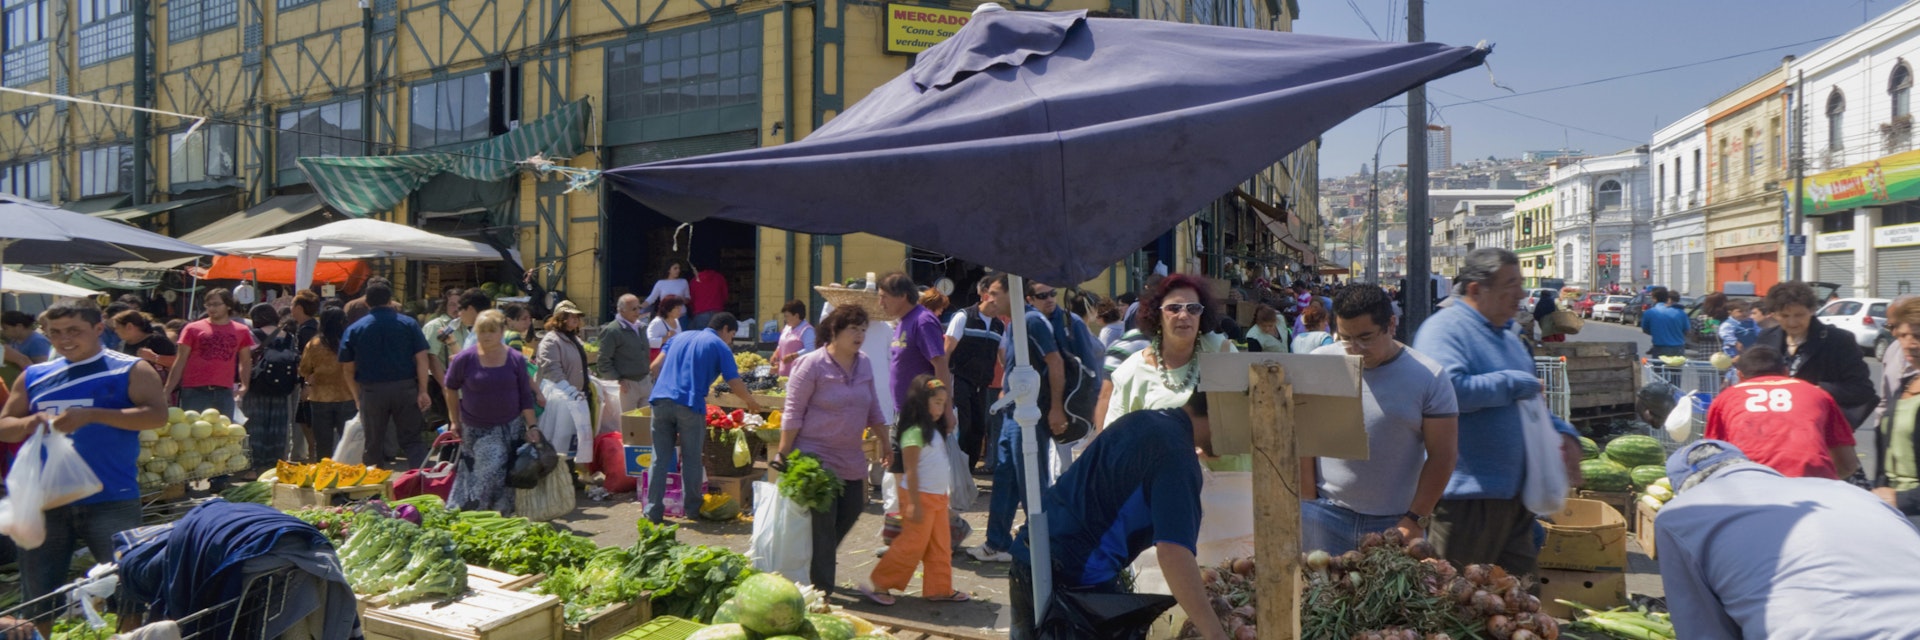 Vendors and buyers at Mercado Cardonal, ValparaIso, Chile